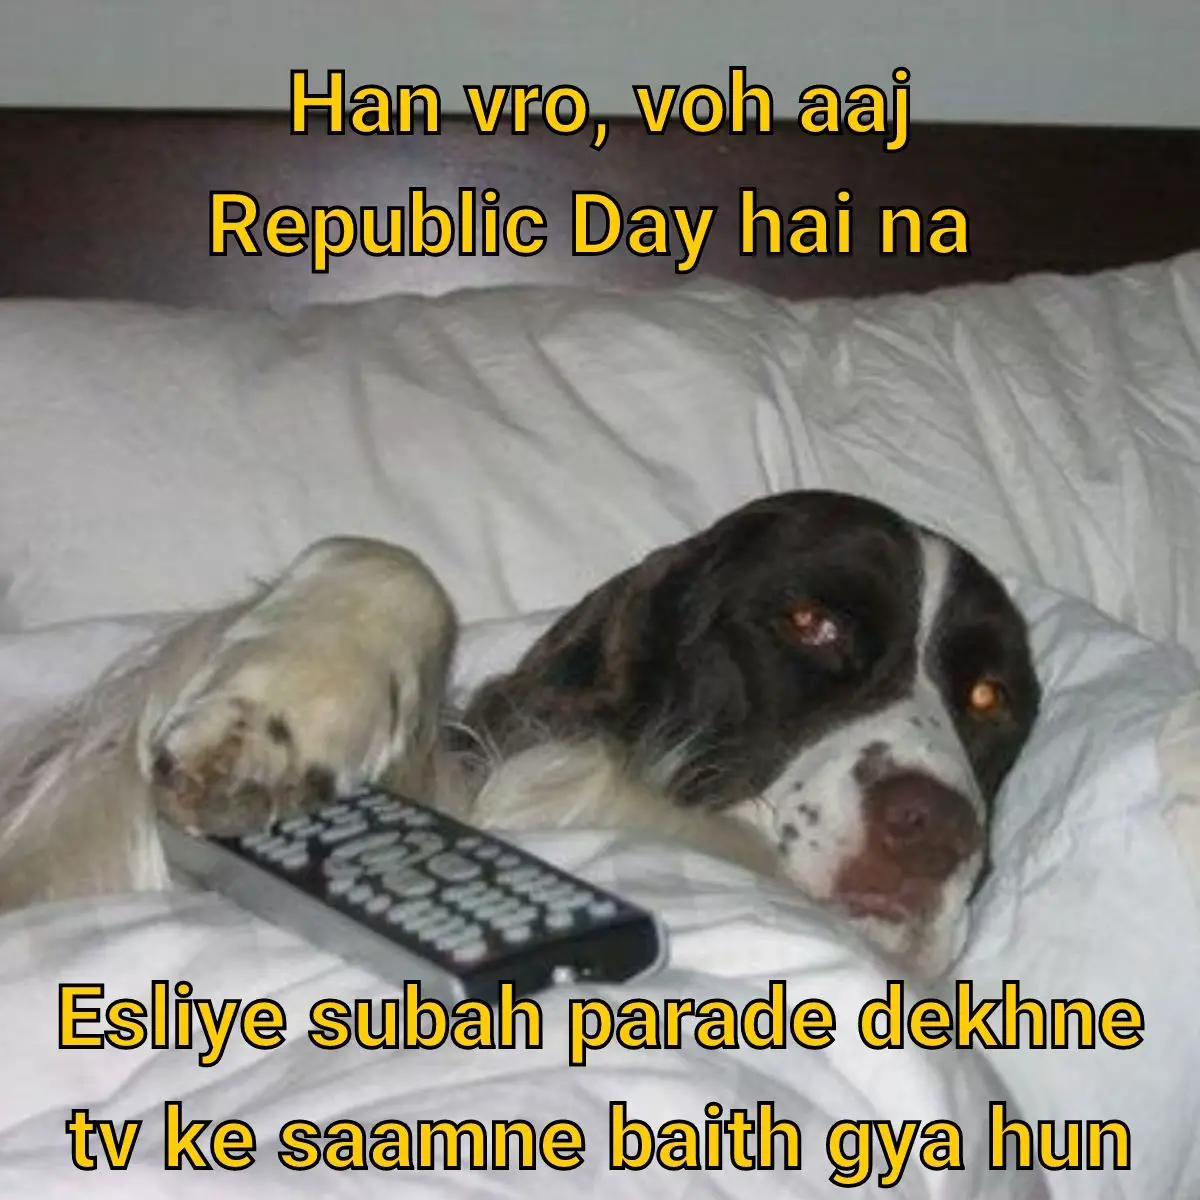 Republic Day meme on Parade